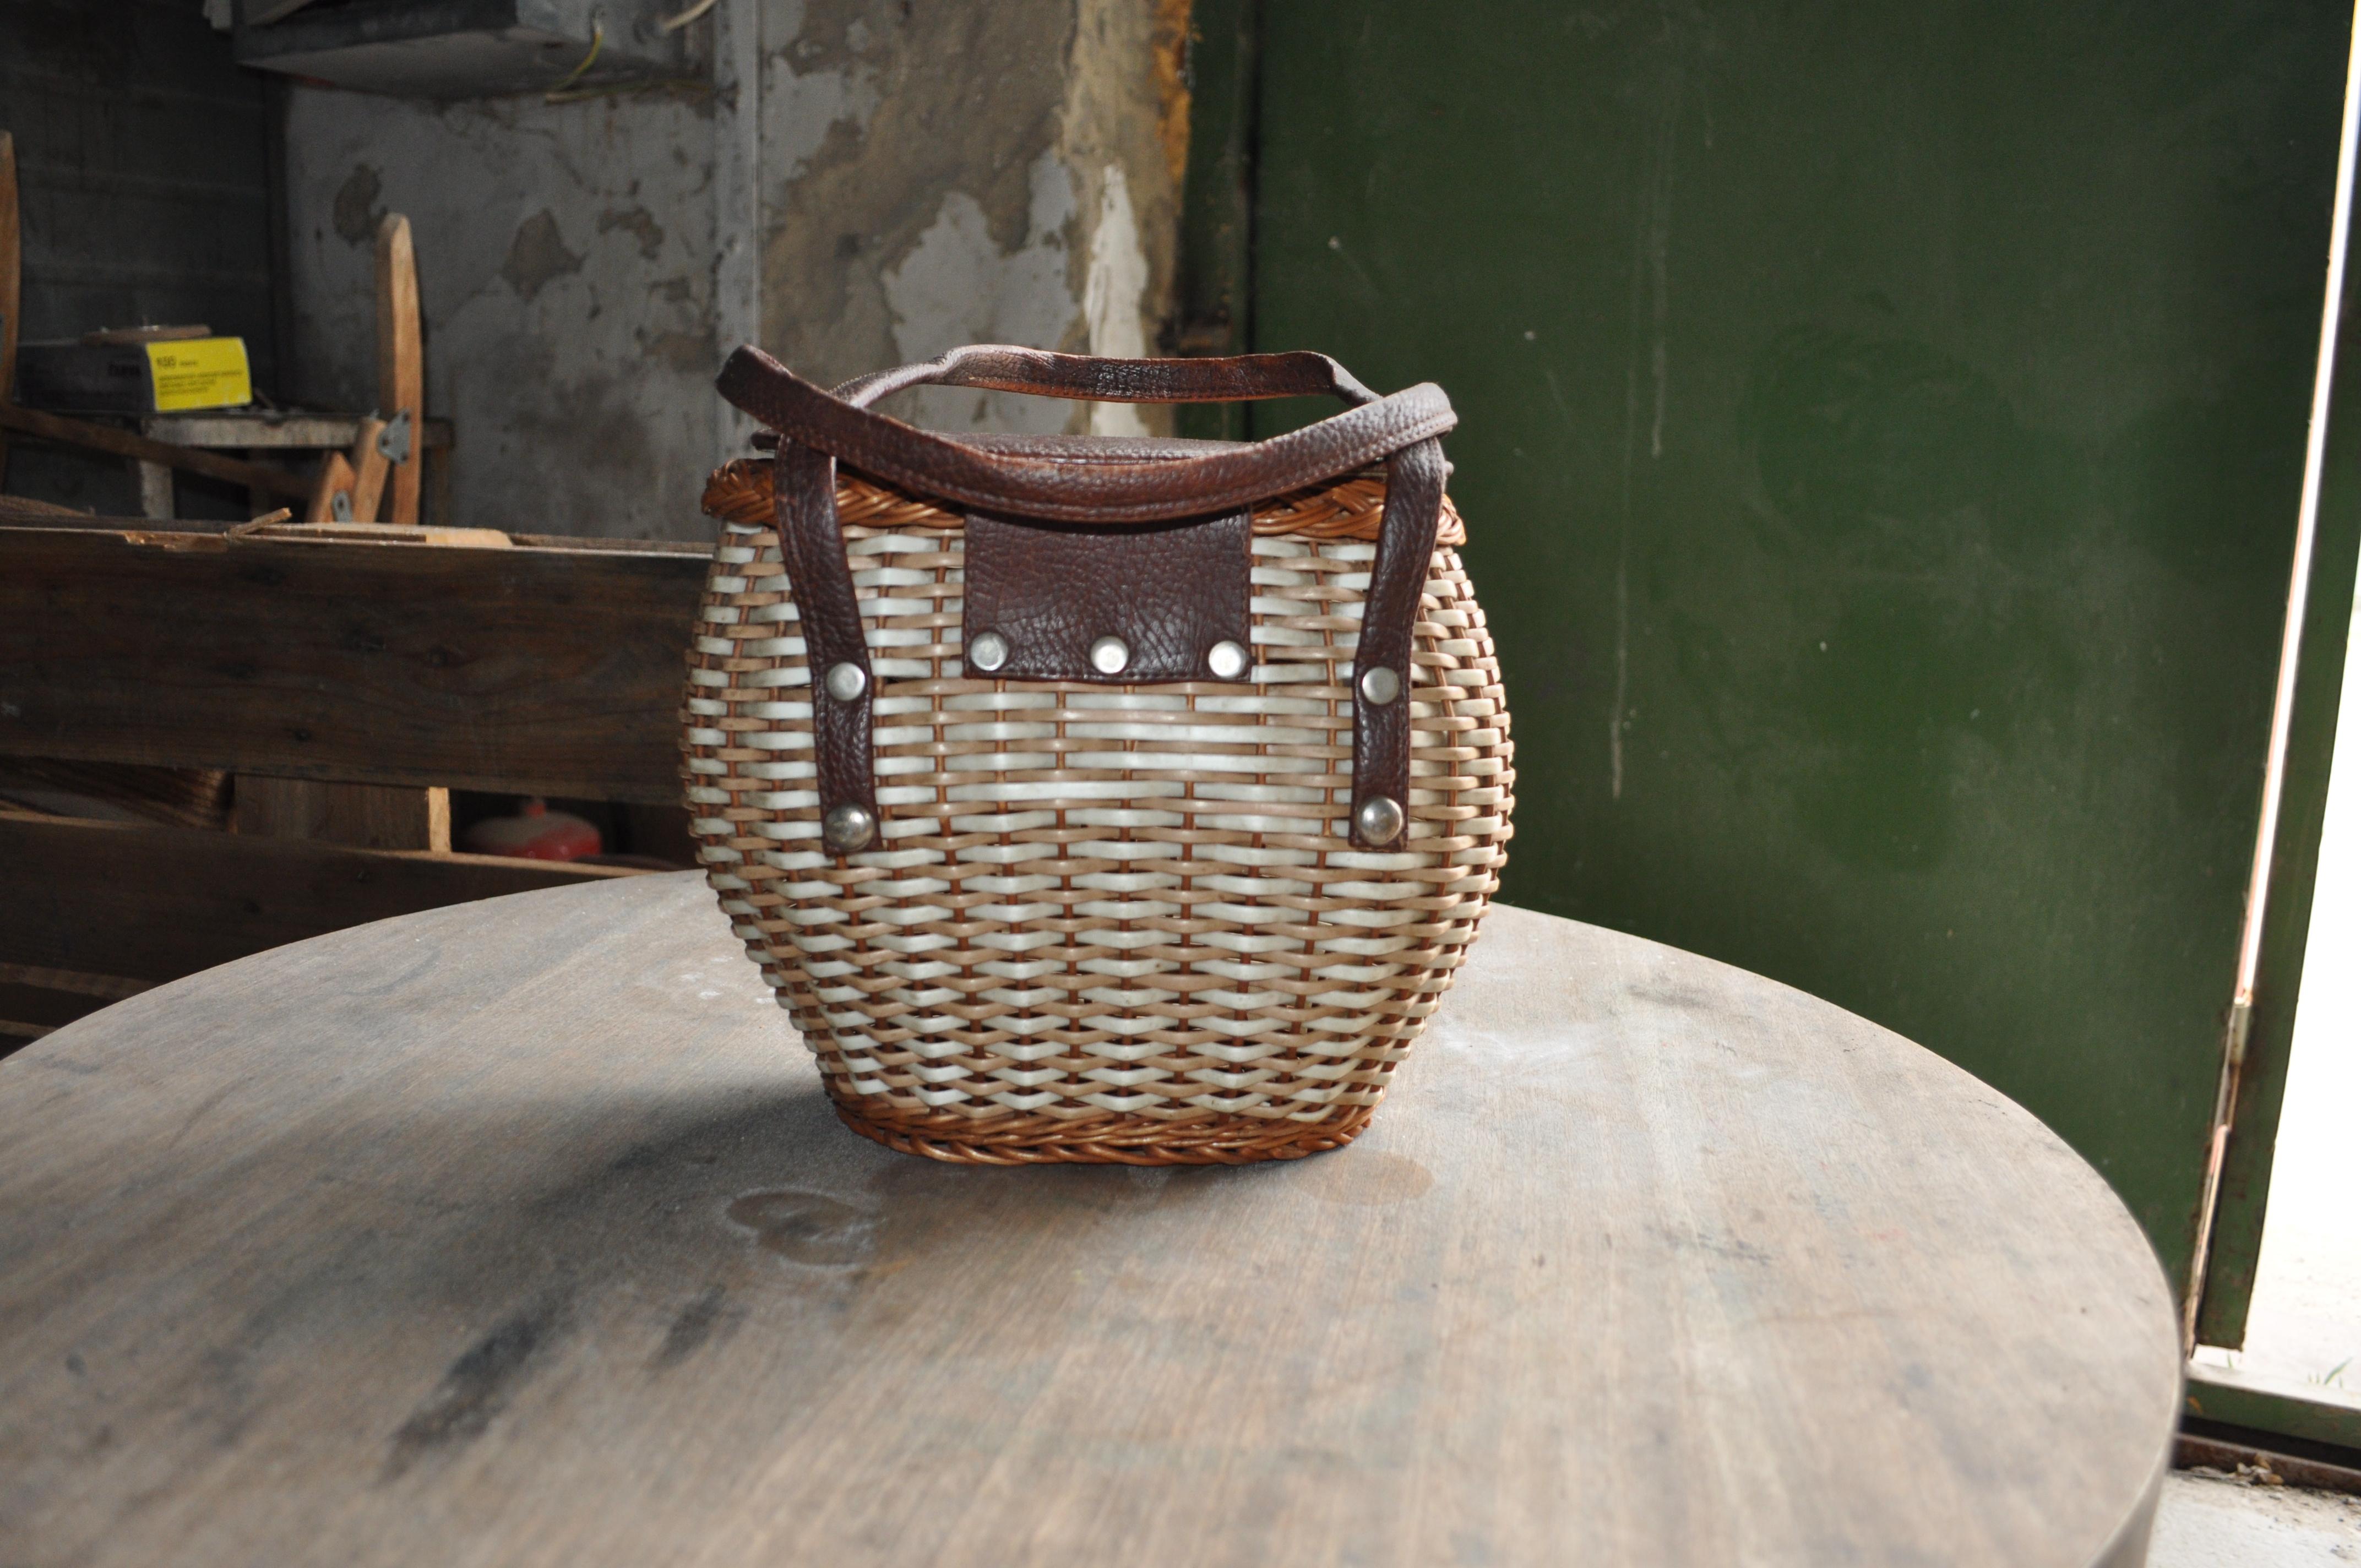 Vintage wicker bag with leather handles
Measures: Length (Depth) 5.51 in
Width 11.02 in
Height 8.66 in.